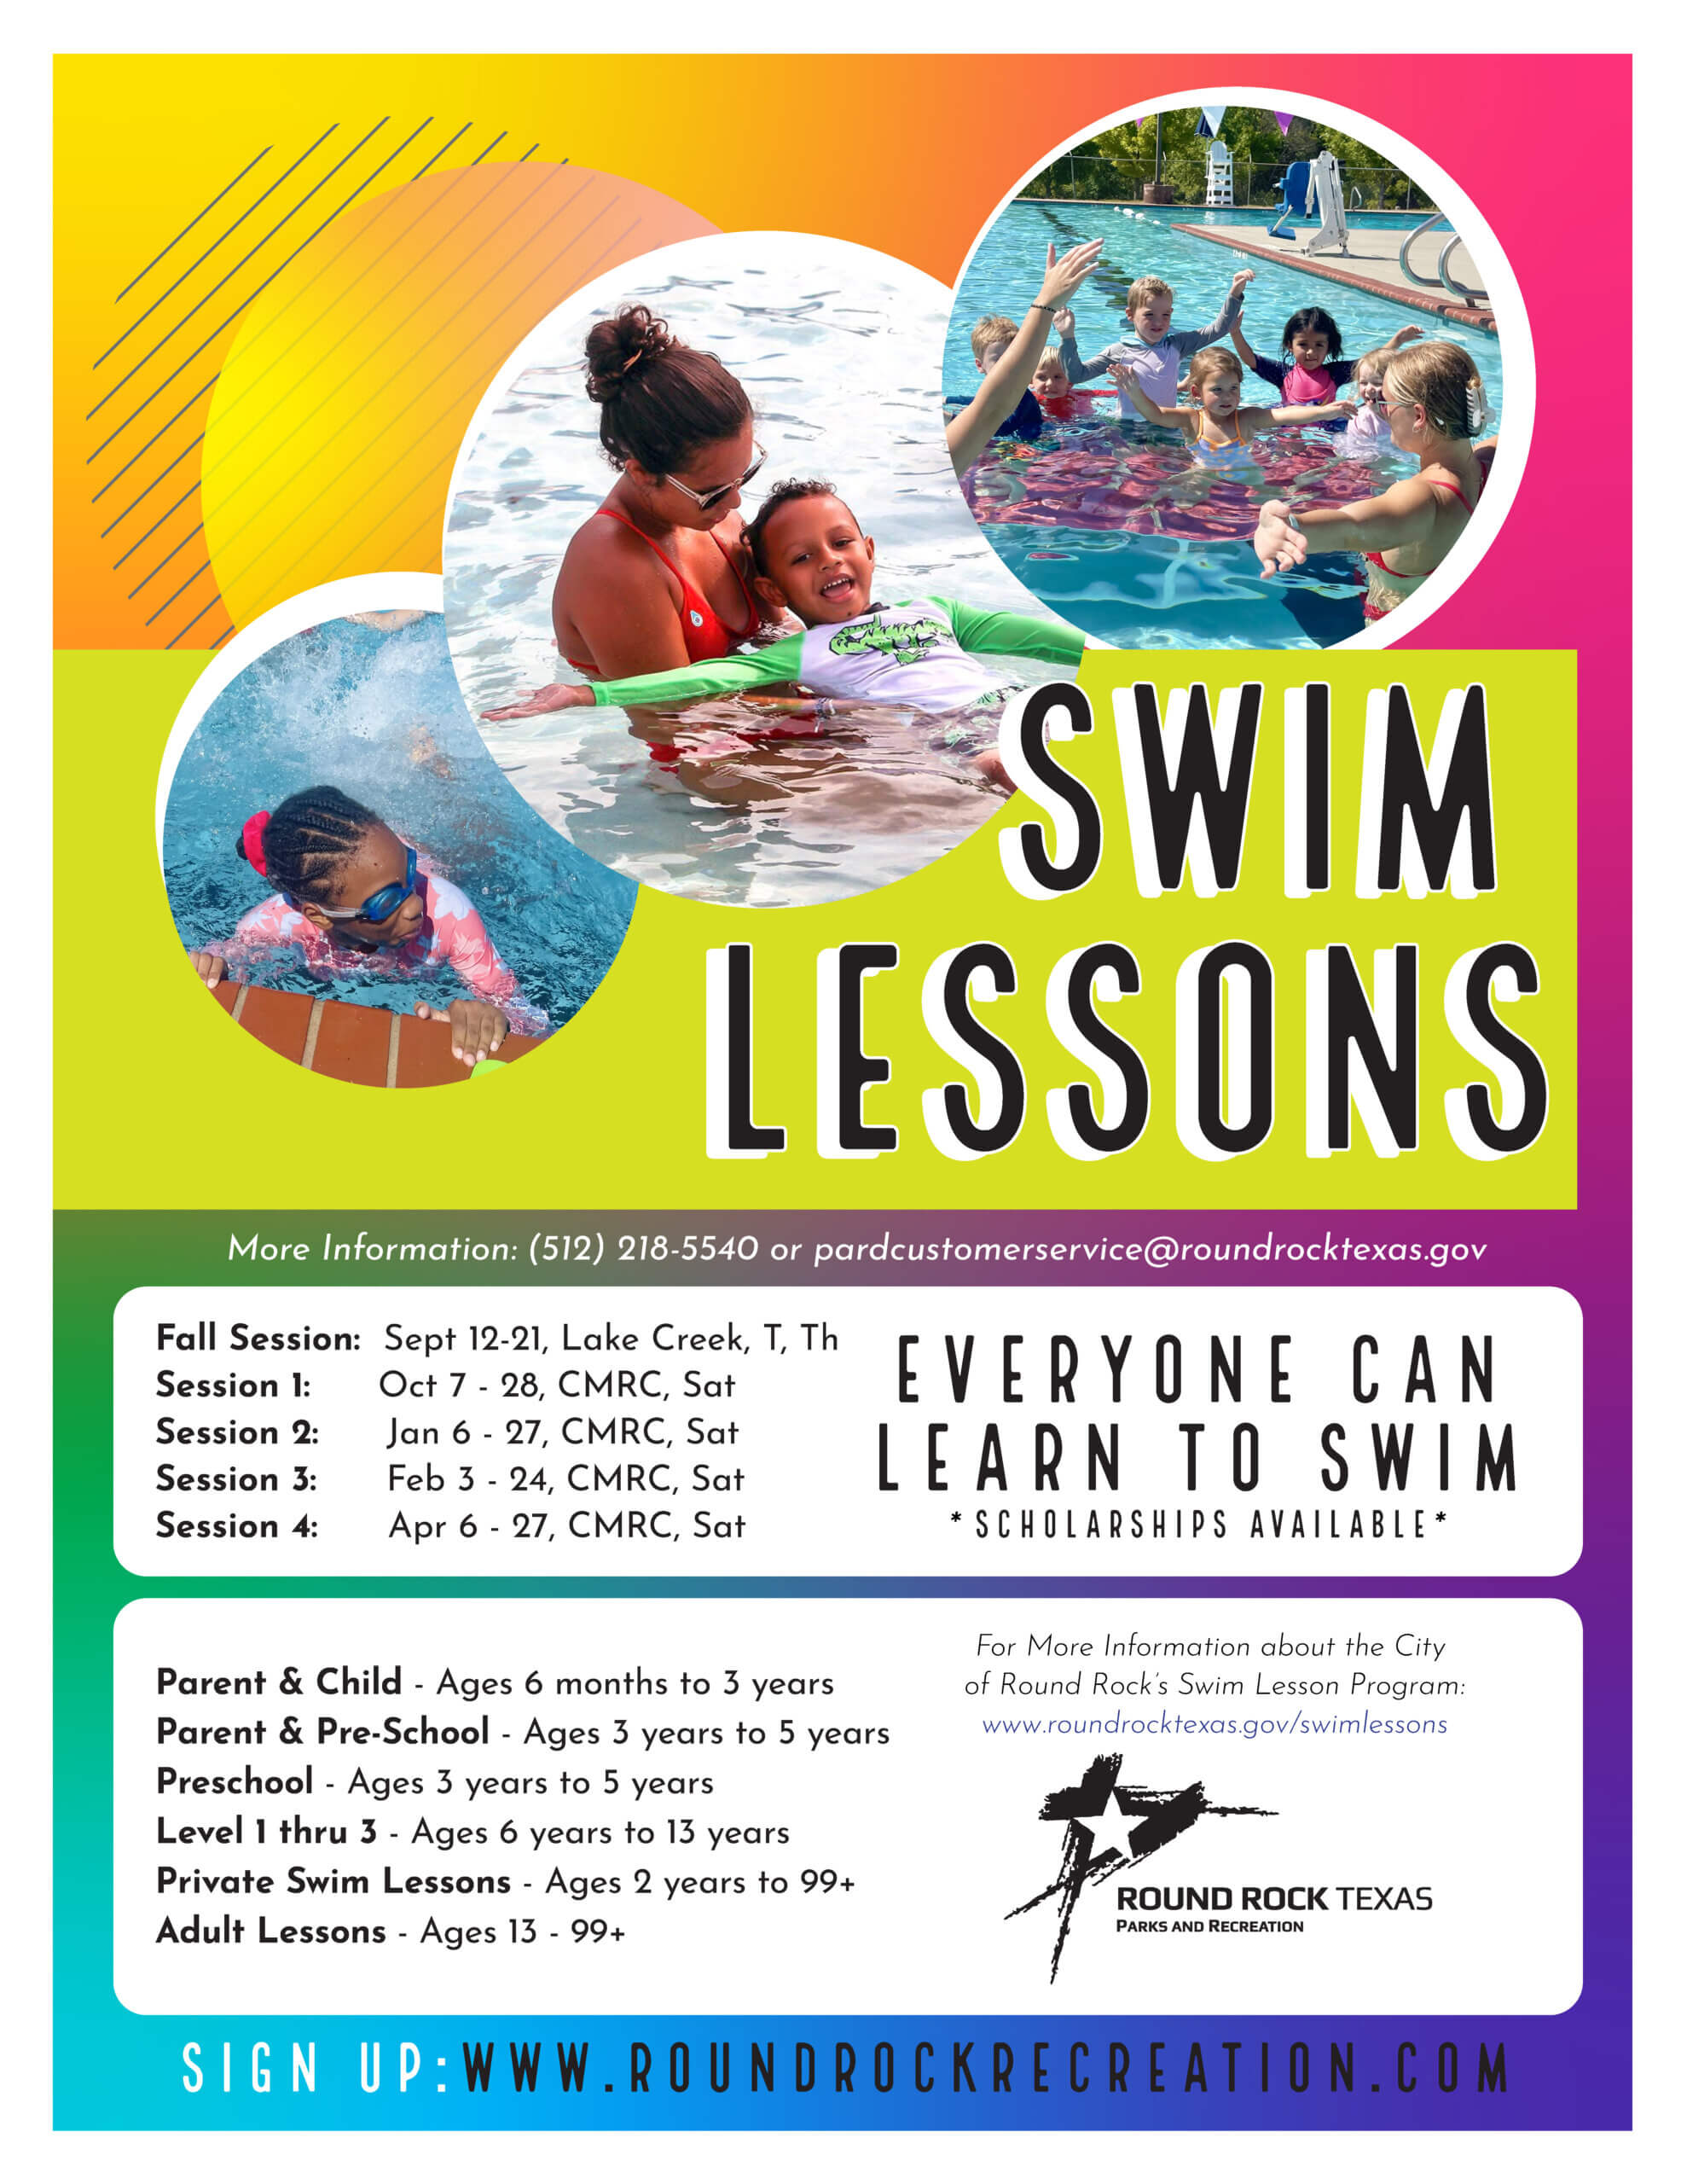 Swimming Teaching: Swimming Lesson Ideas: Songs & Lyrics